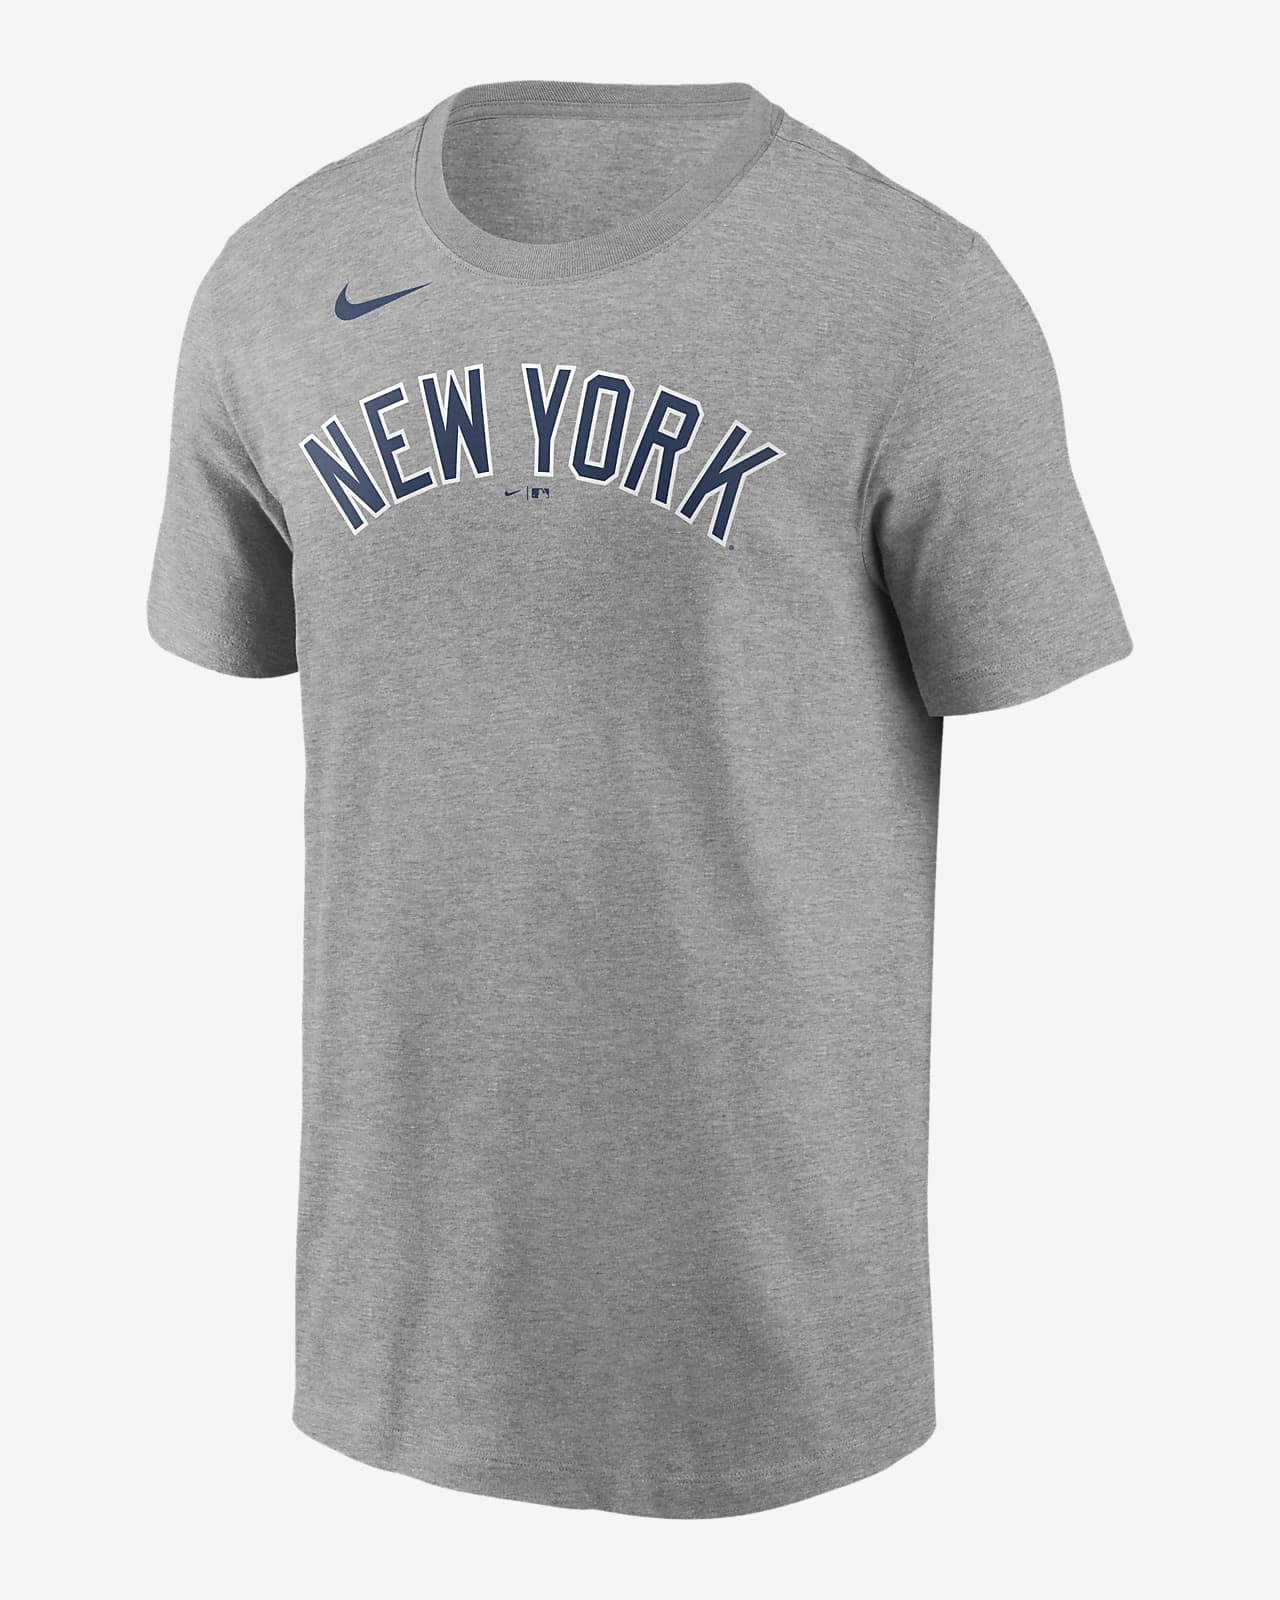 new york t shirt mens